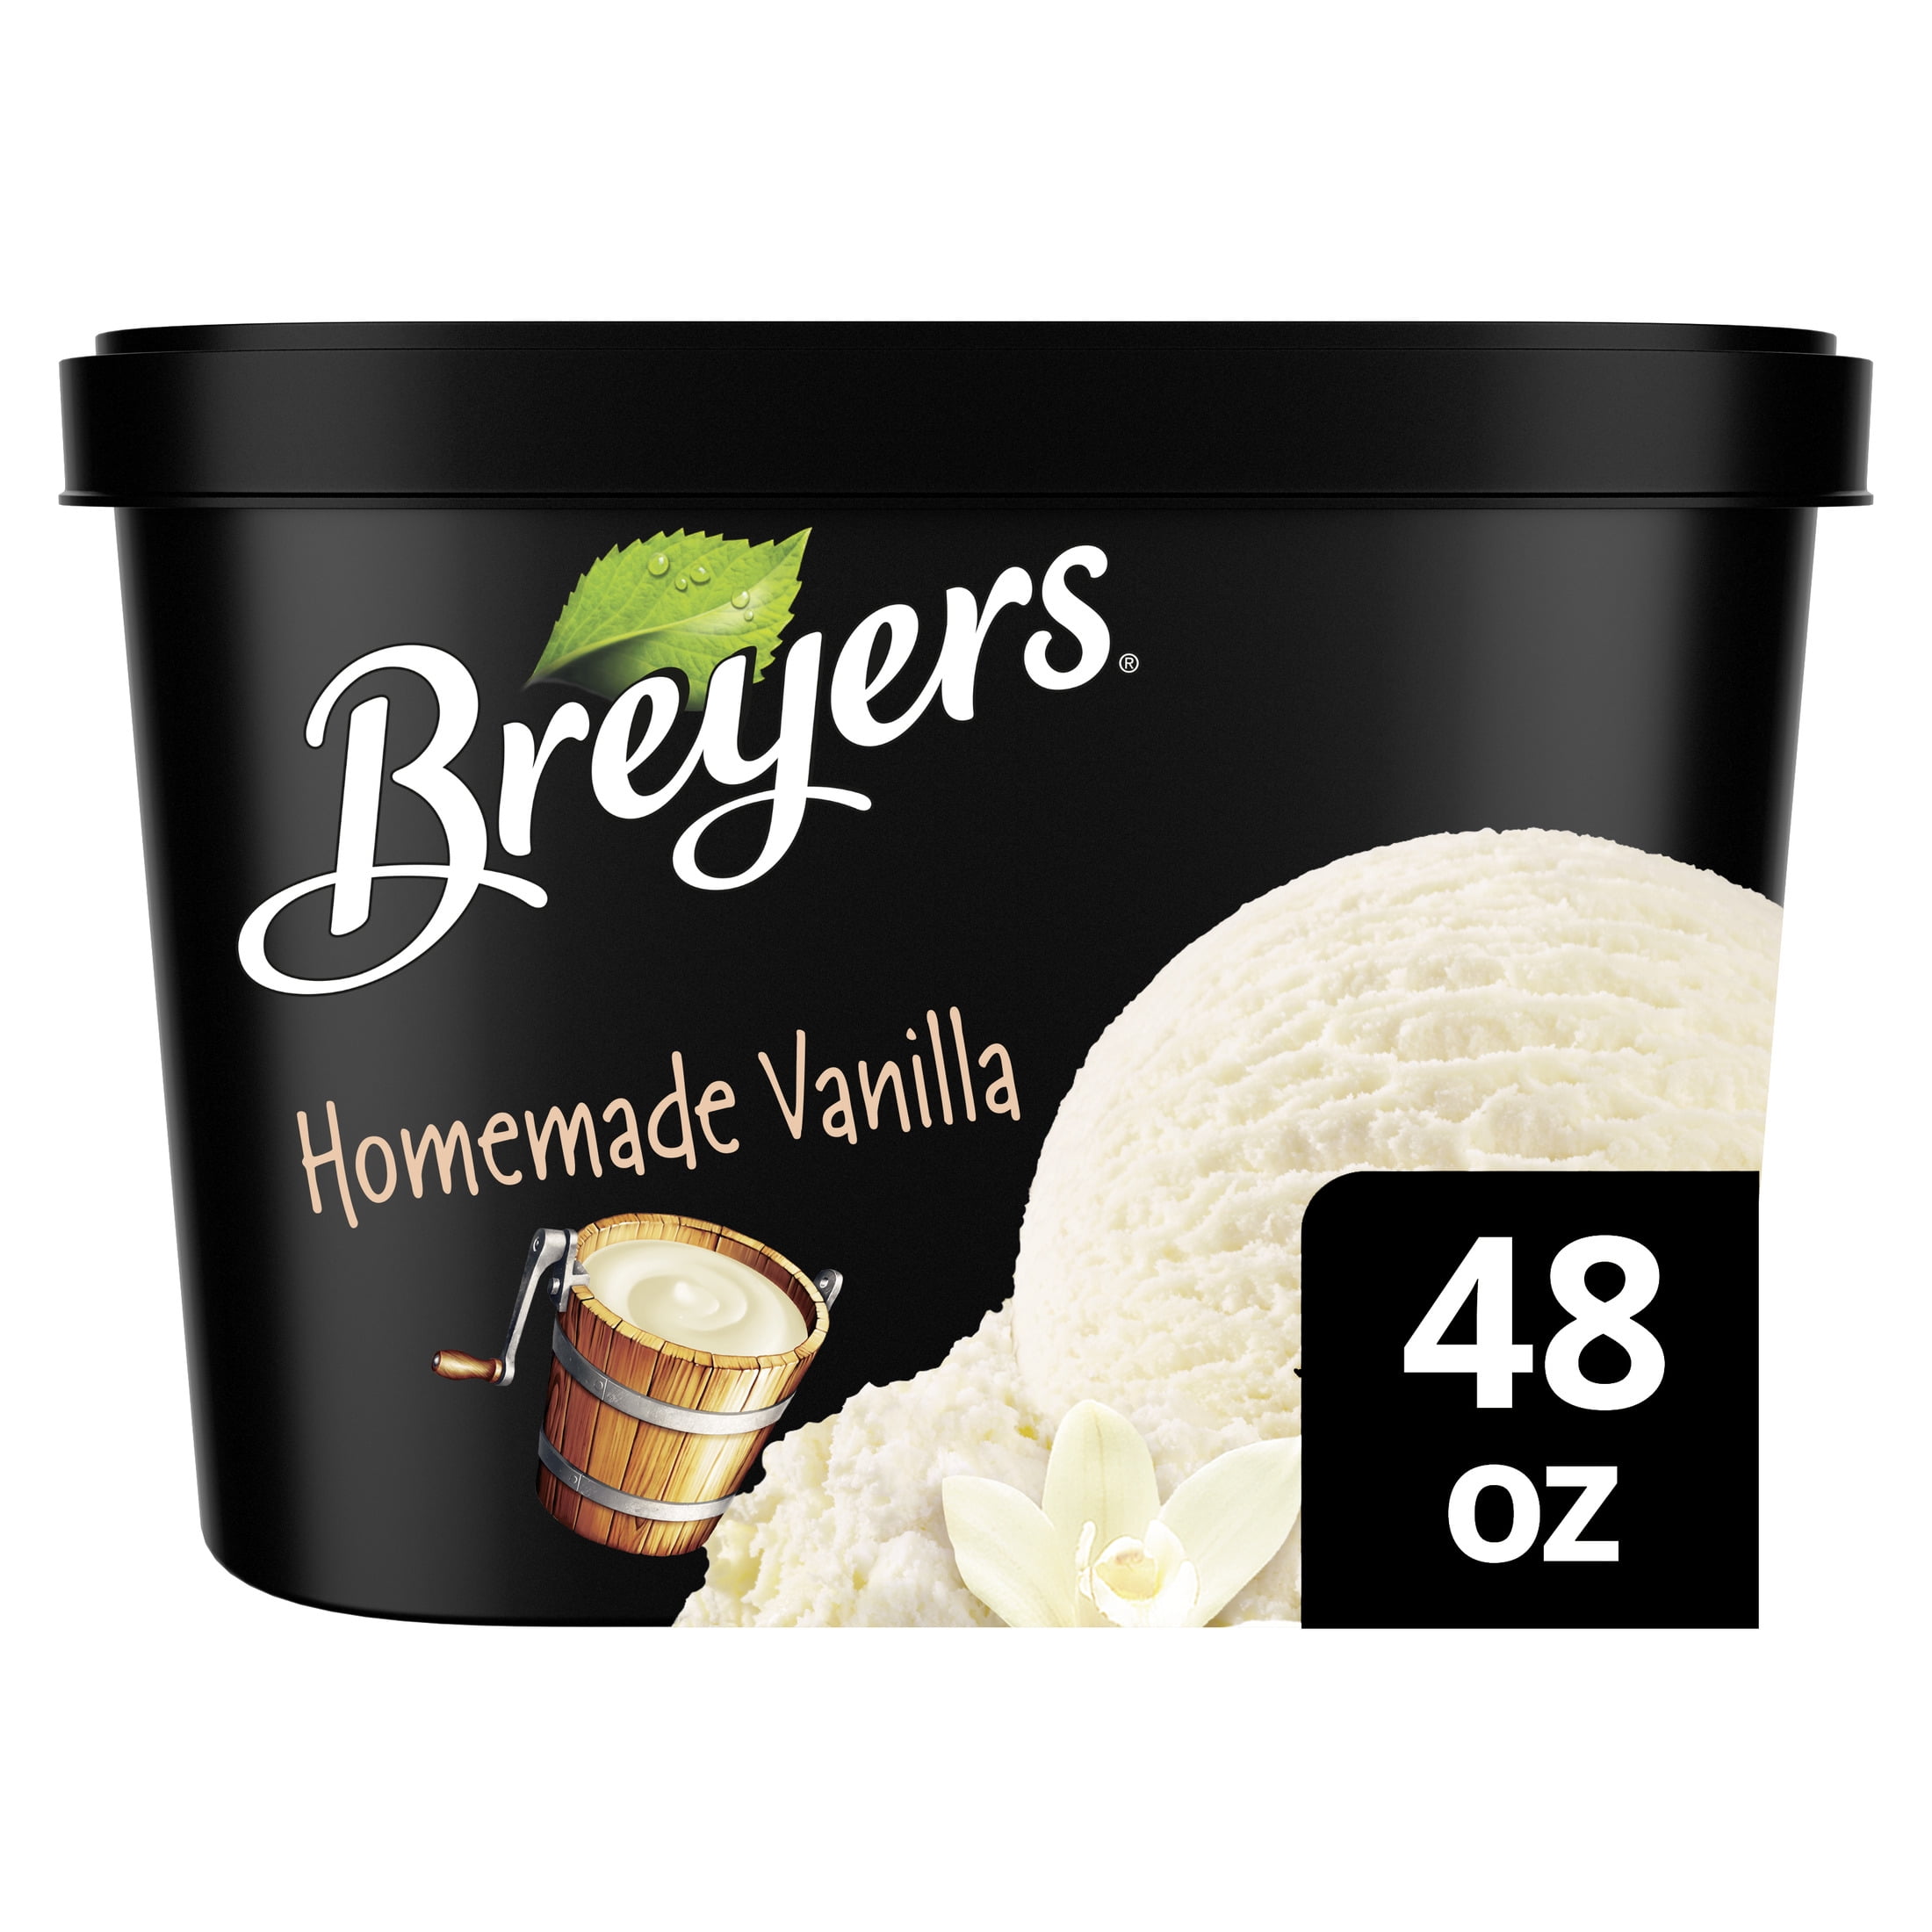 Breyers Classics Ice Cream Homemade Vanilla 48 oz, Perfect with Pie, Cake, and Desserts photo